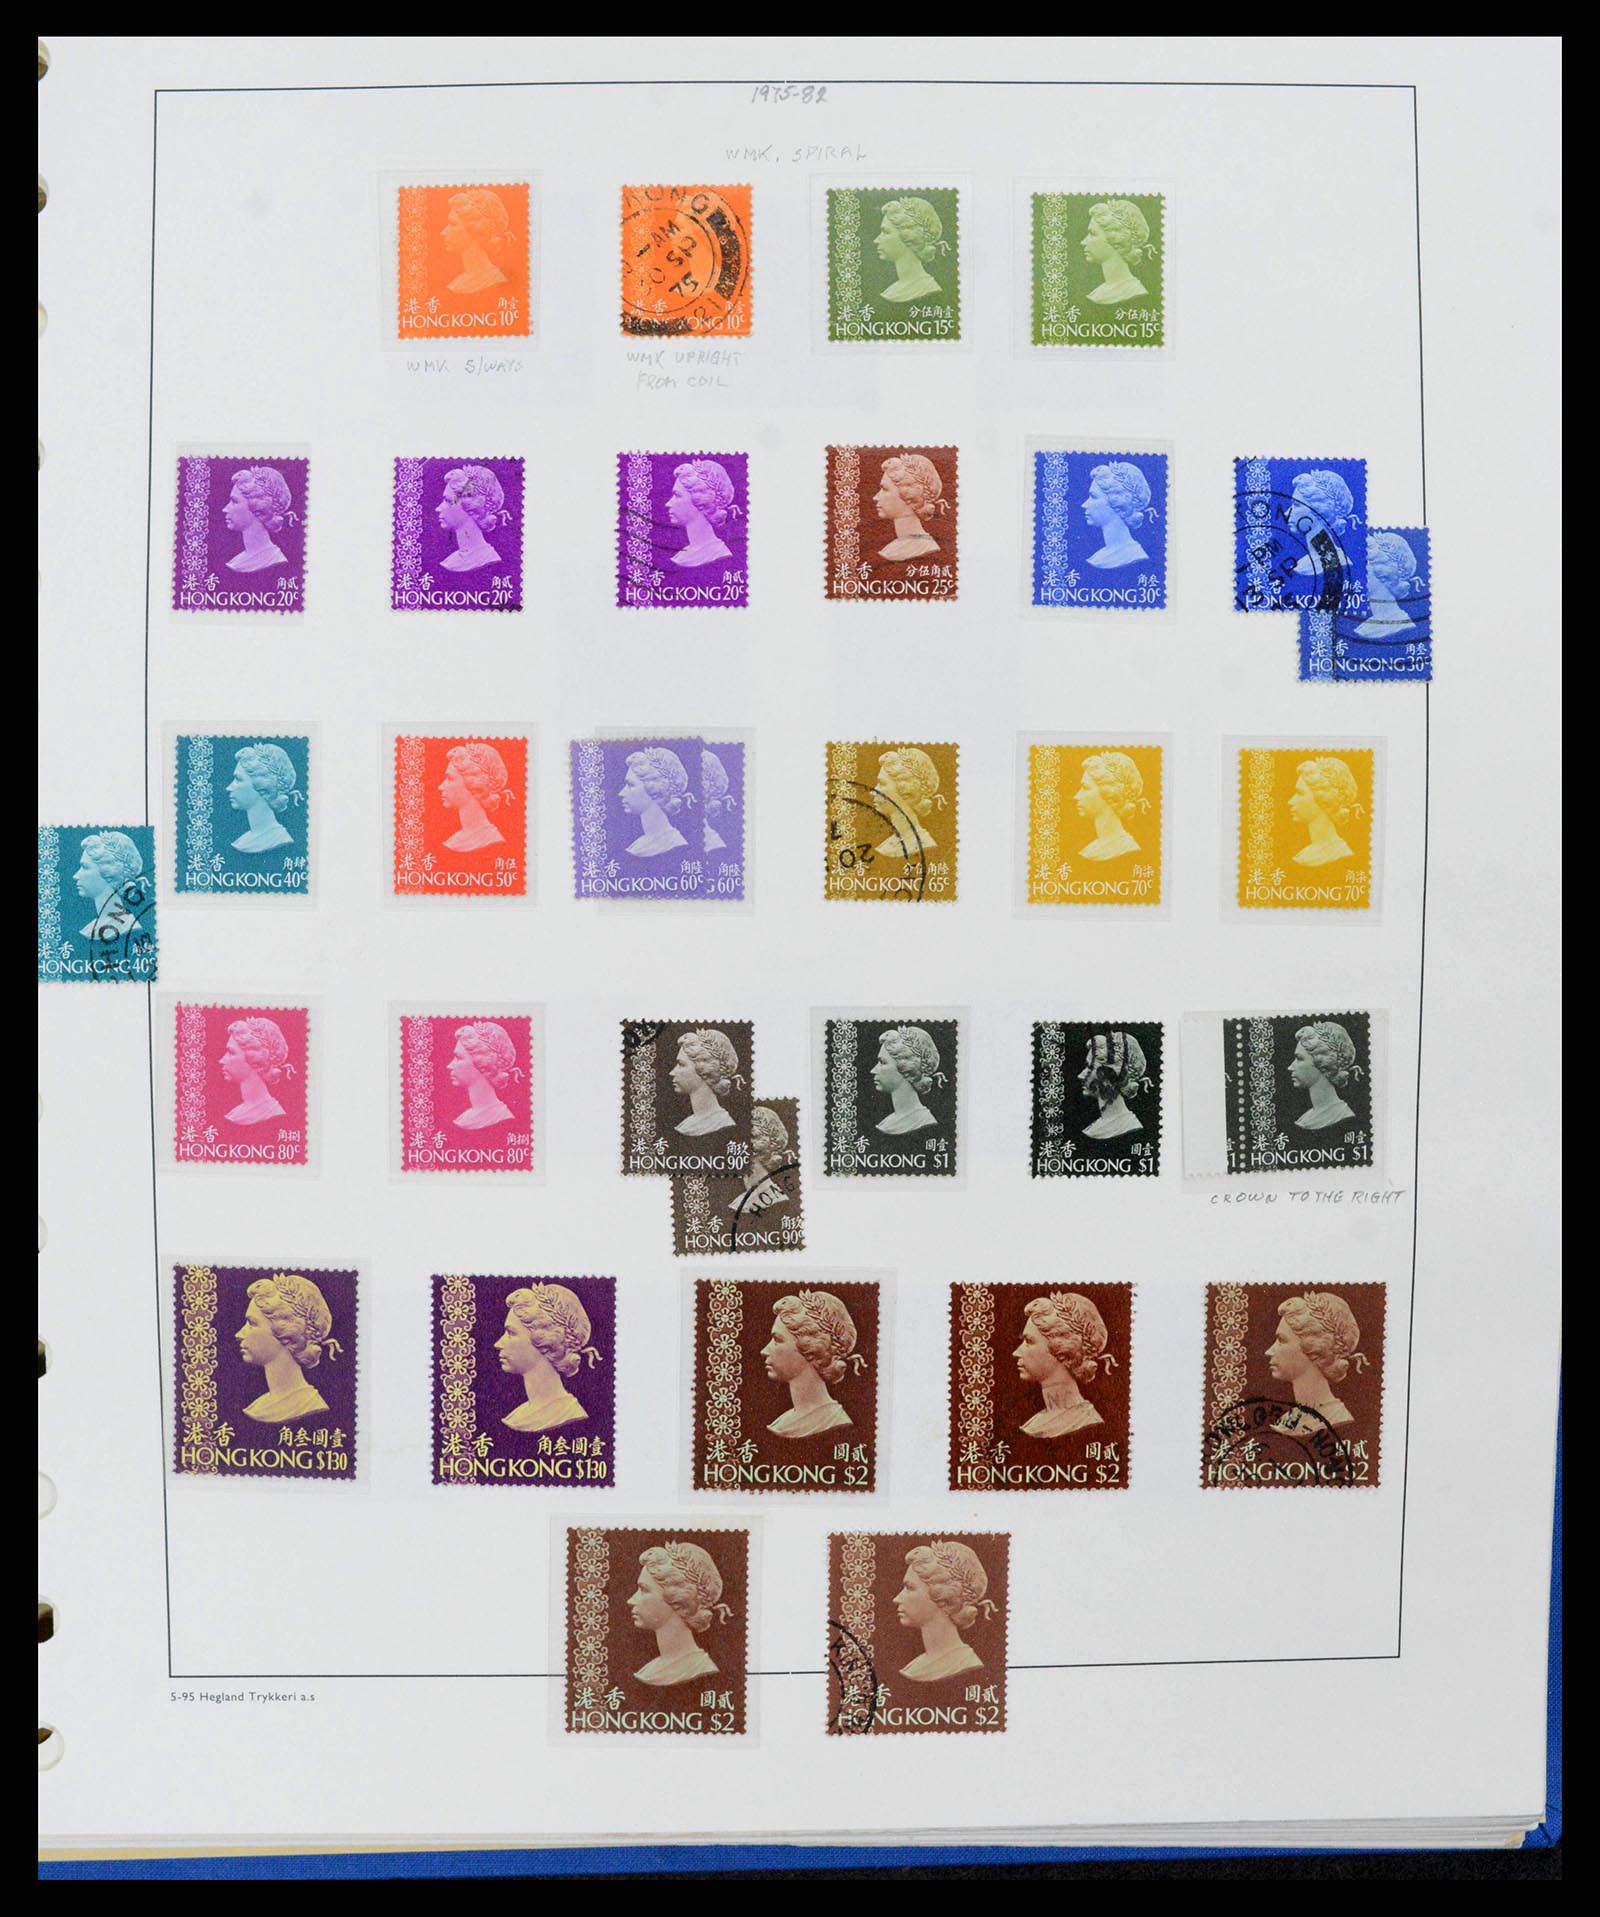 37955 0066 - Stamp collection 37955 Hong Kong supercollection 1862-2007.